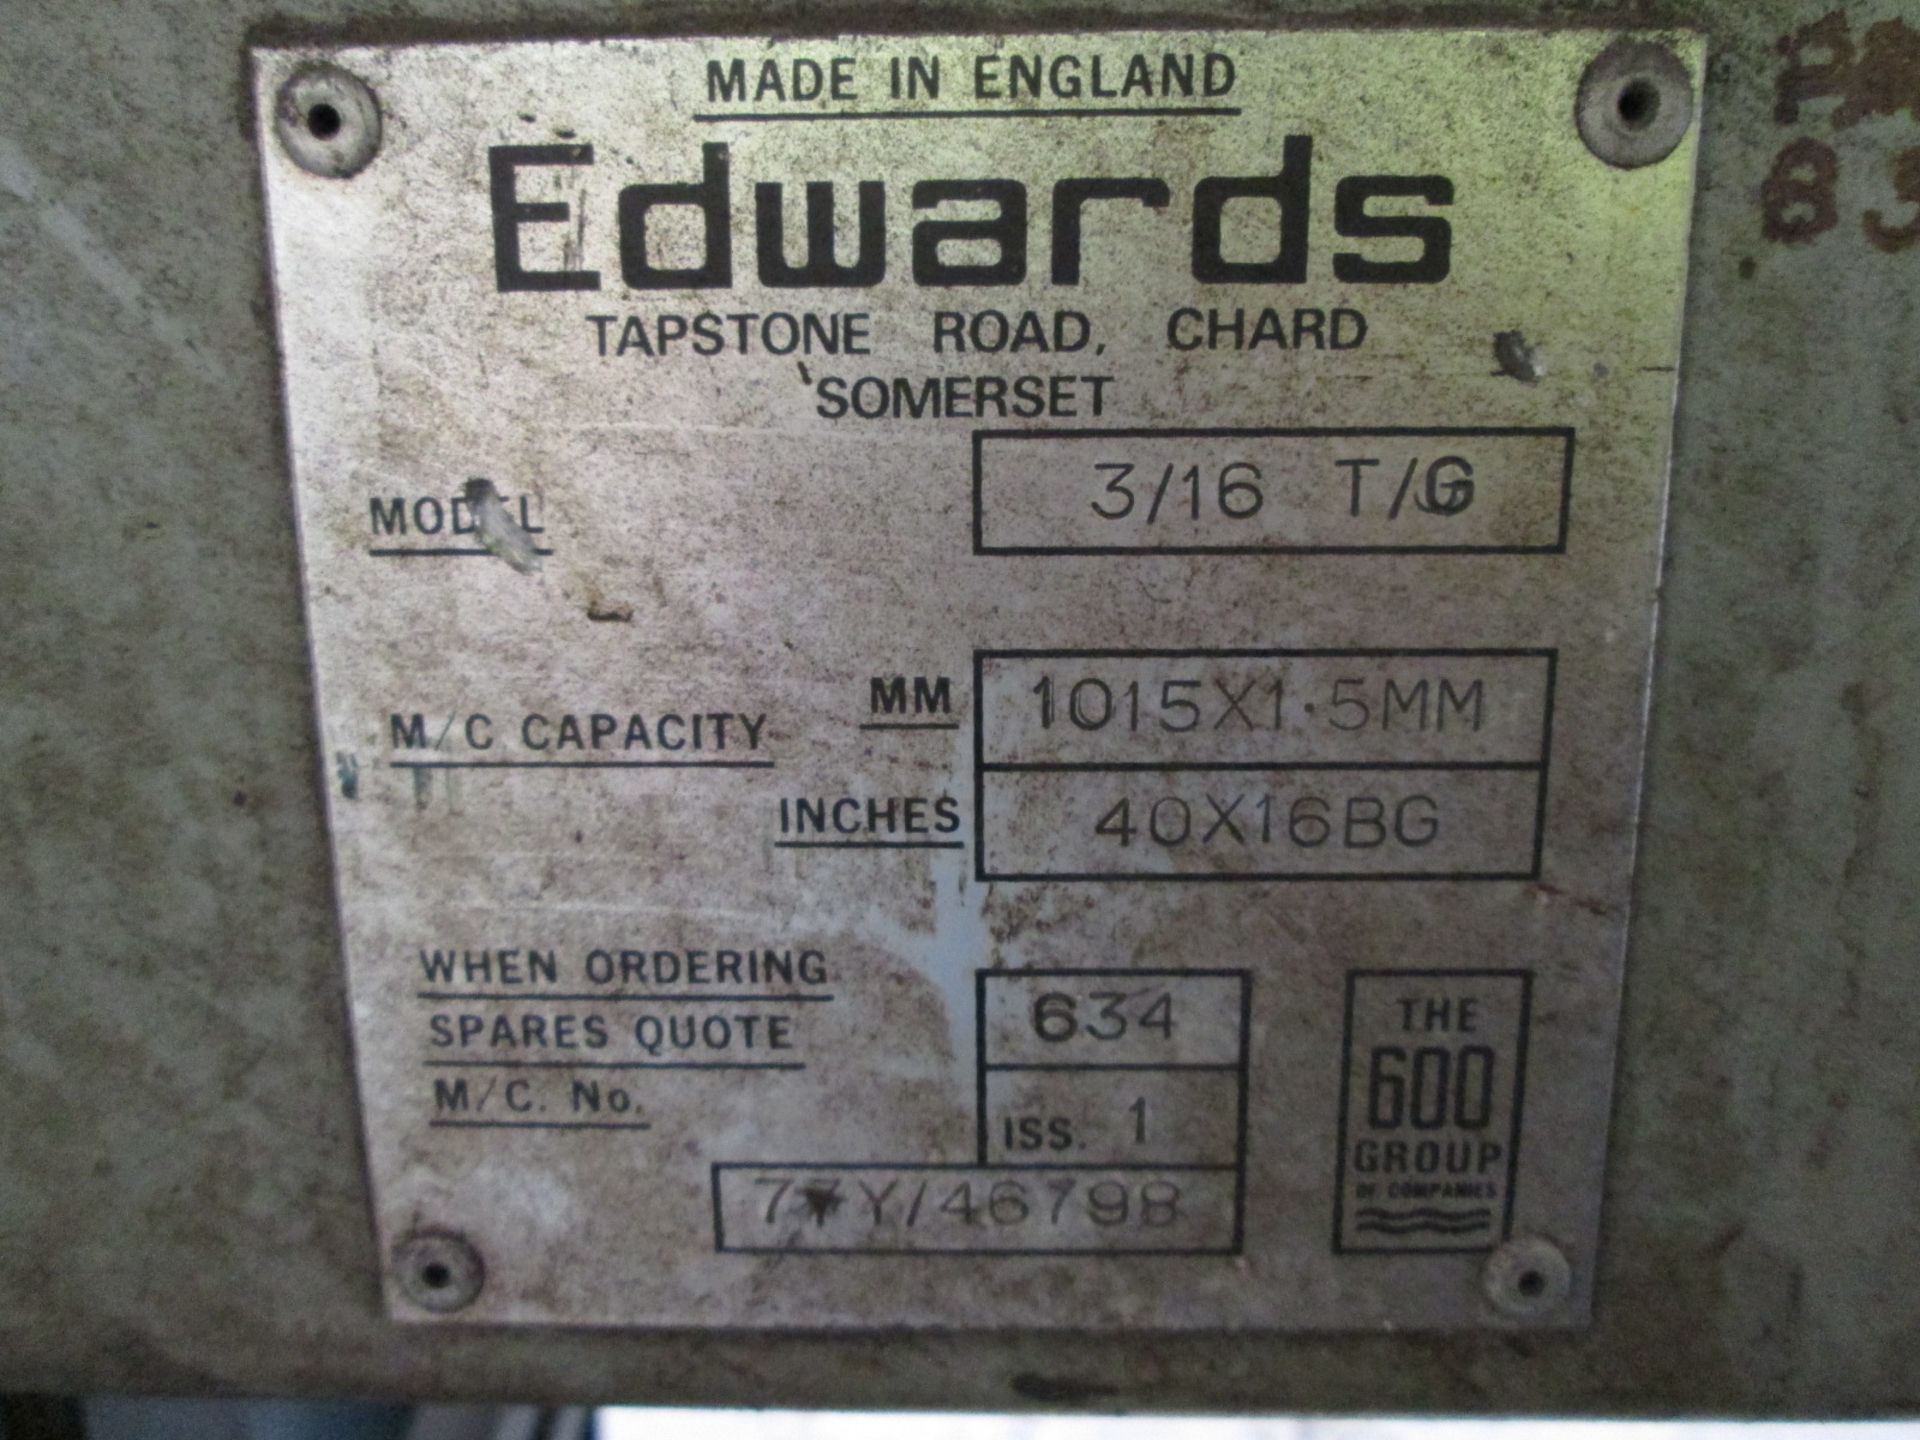 Edwards Pedicut 3/16 T/G Manual Guillotine, Capacity 1015 x 1.5 mm (40 x 16BG) S/N 7Y/46798 - Image 4 of 6